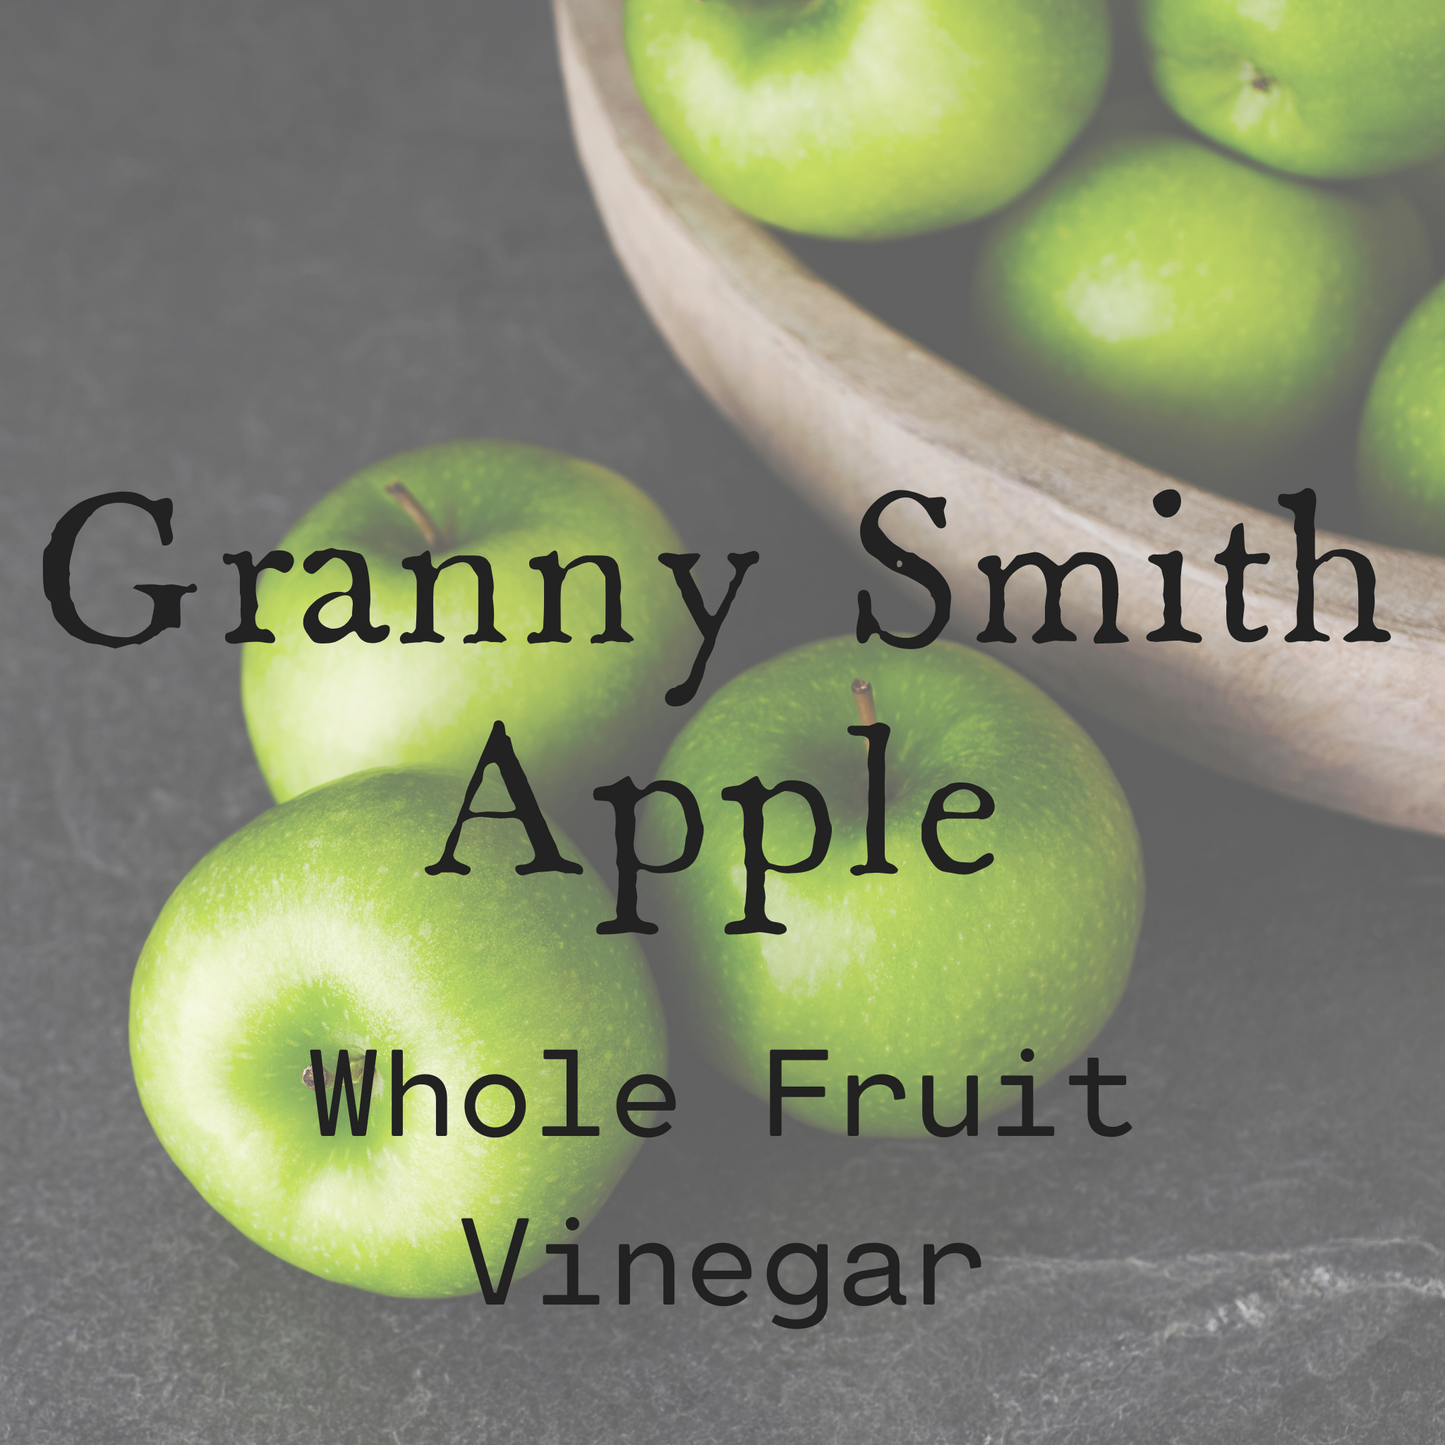 Granny Smith Apple Whole Fruit Vinegar